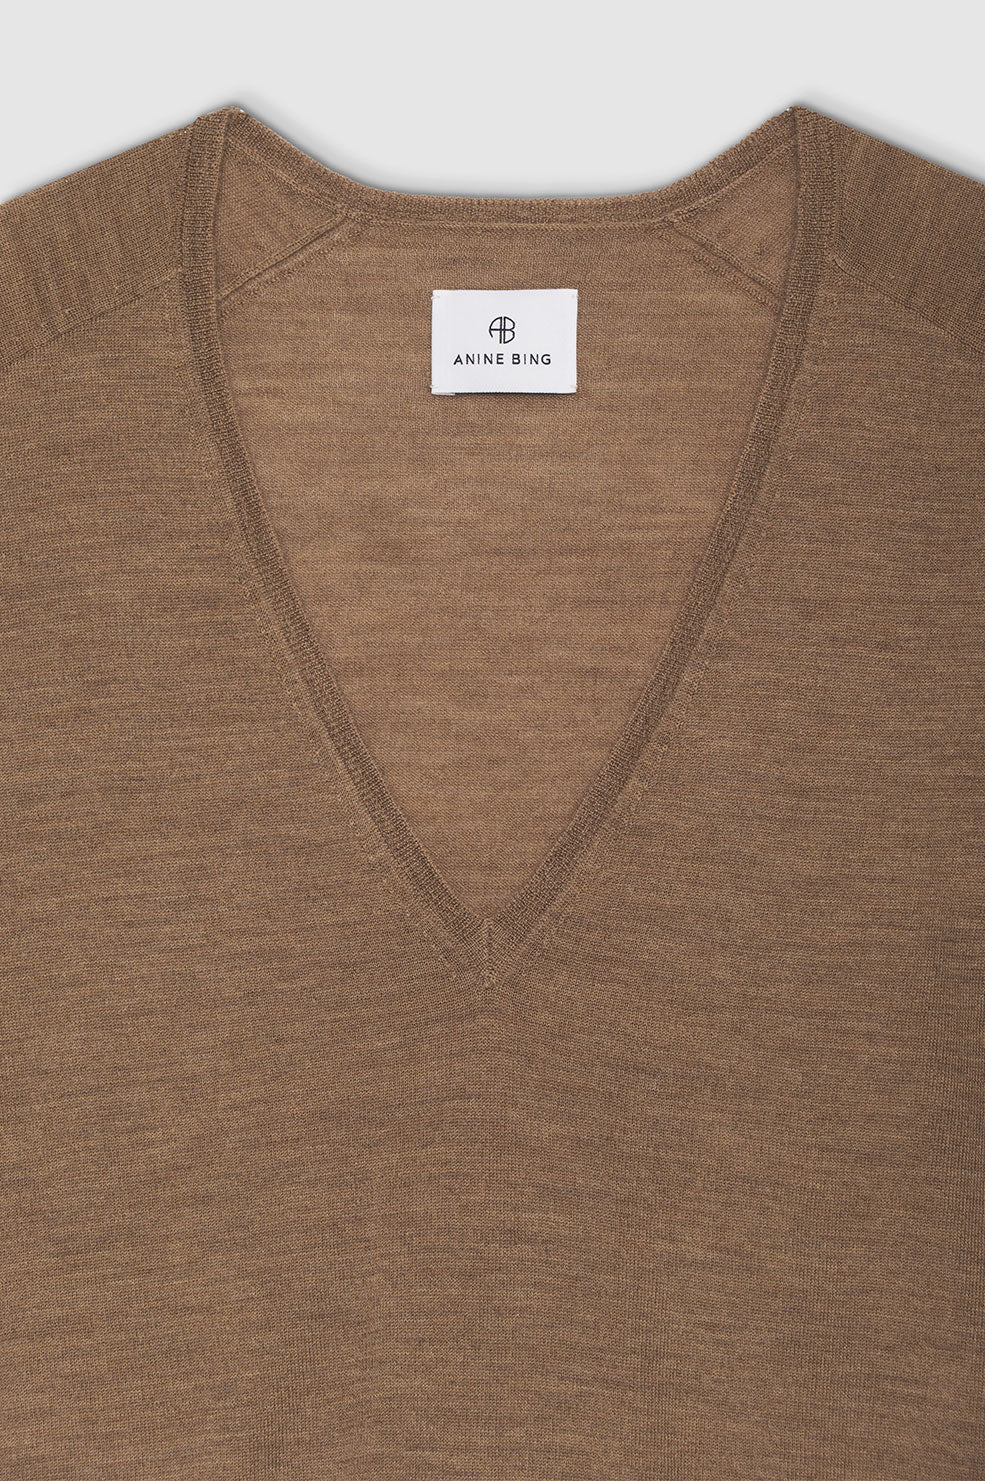 ANINE BING Aria Sweater - Camel - Detail View